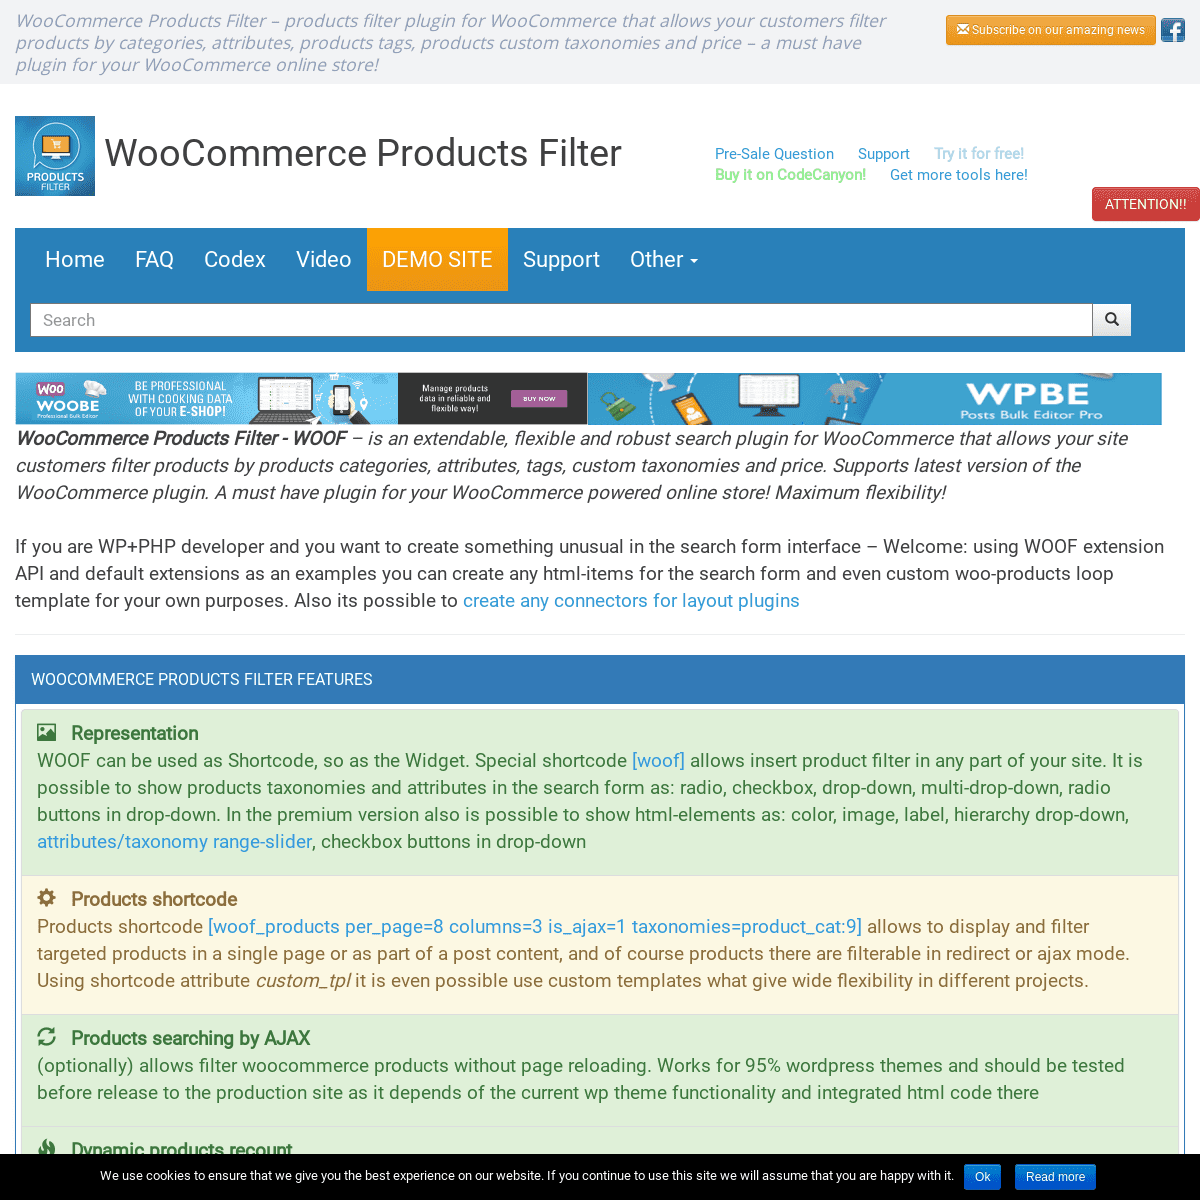 A complete backup of woocommerce-filter.com